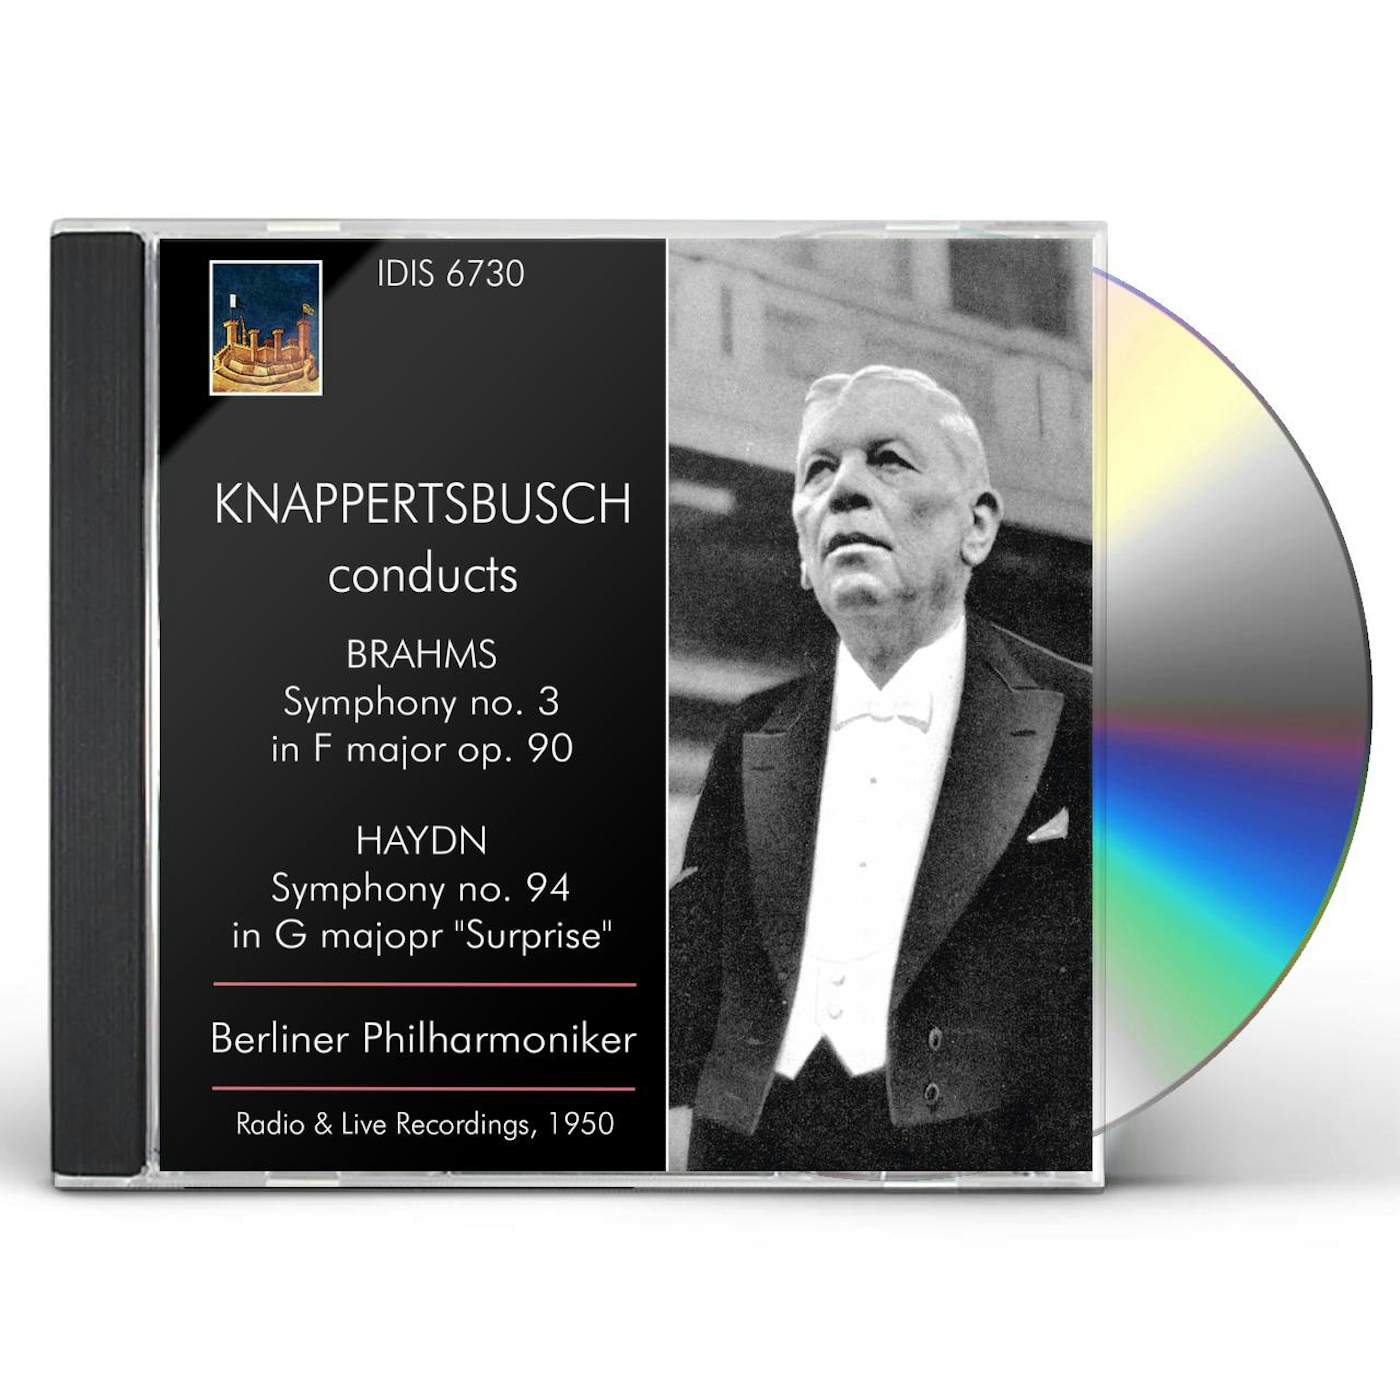 Haydn KNAPPERTSBUSCH CONDUCTS CD